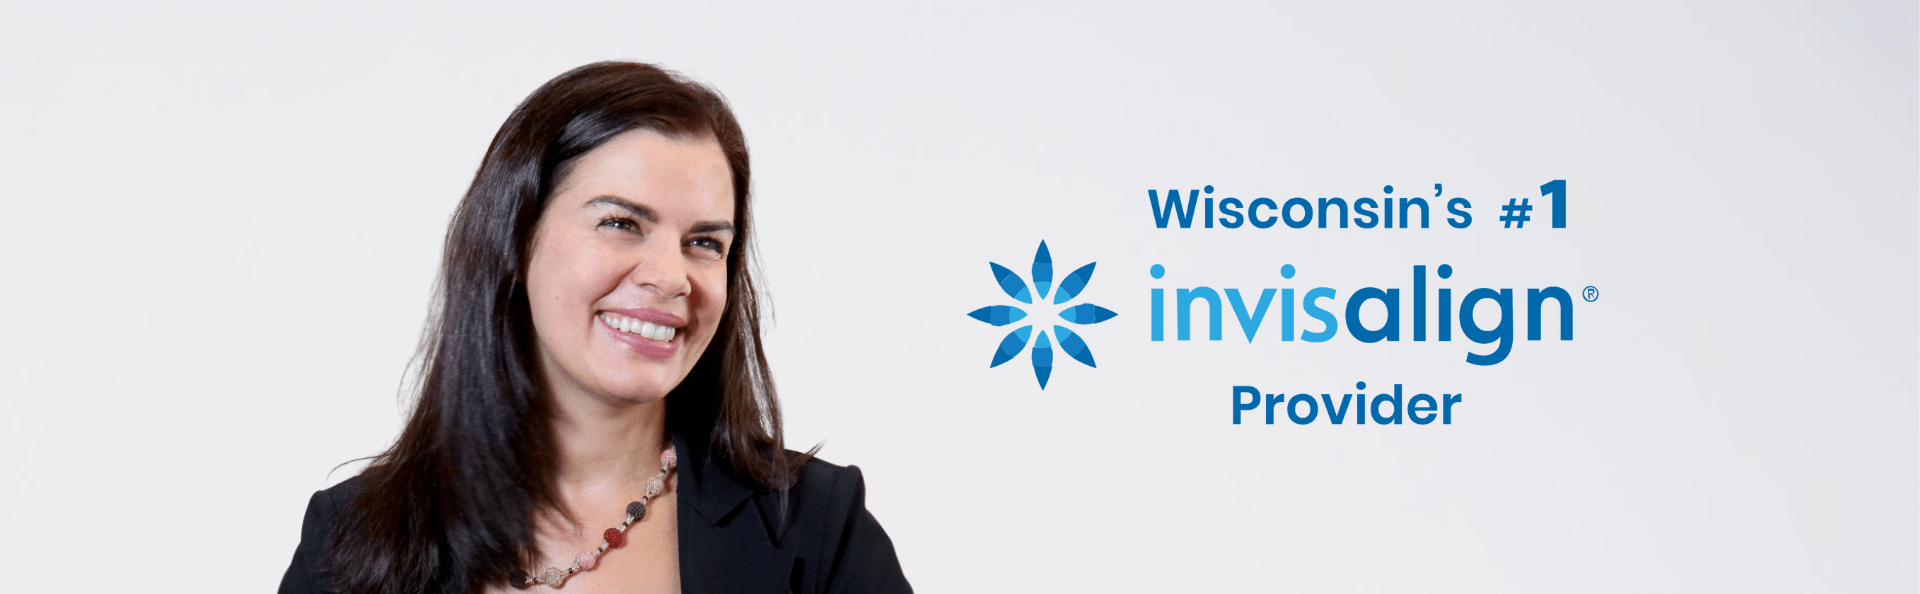 Wisconsin's #1 Invisalign Provider